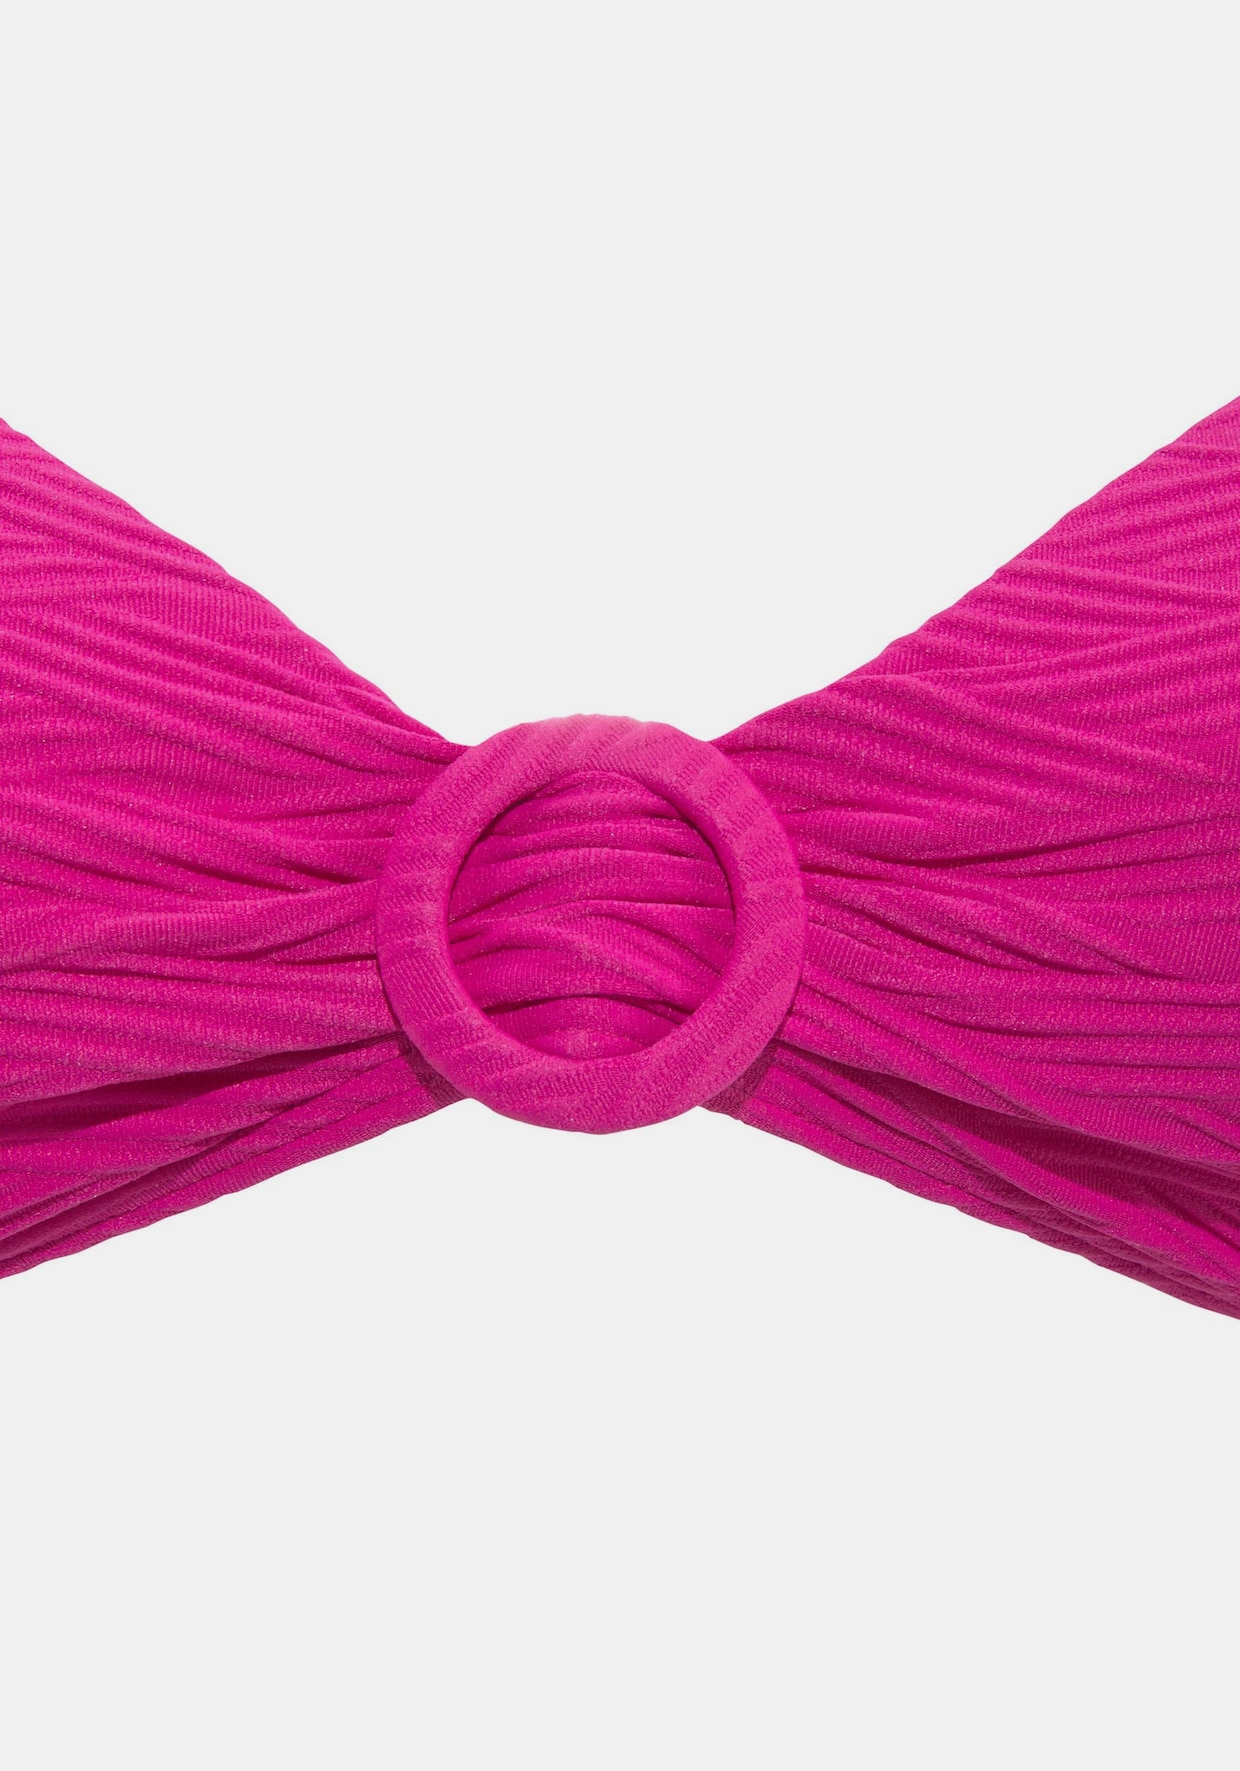 Sunseeker Triangel-Bikini-Top - pink